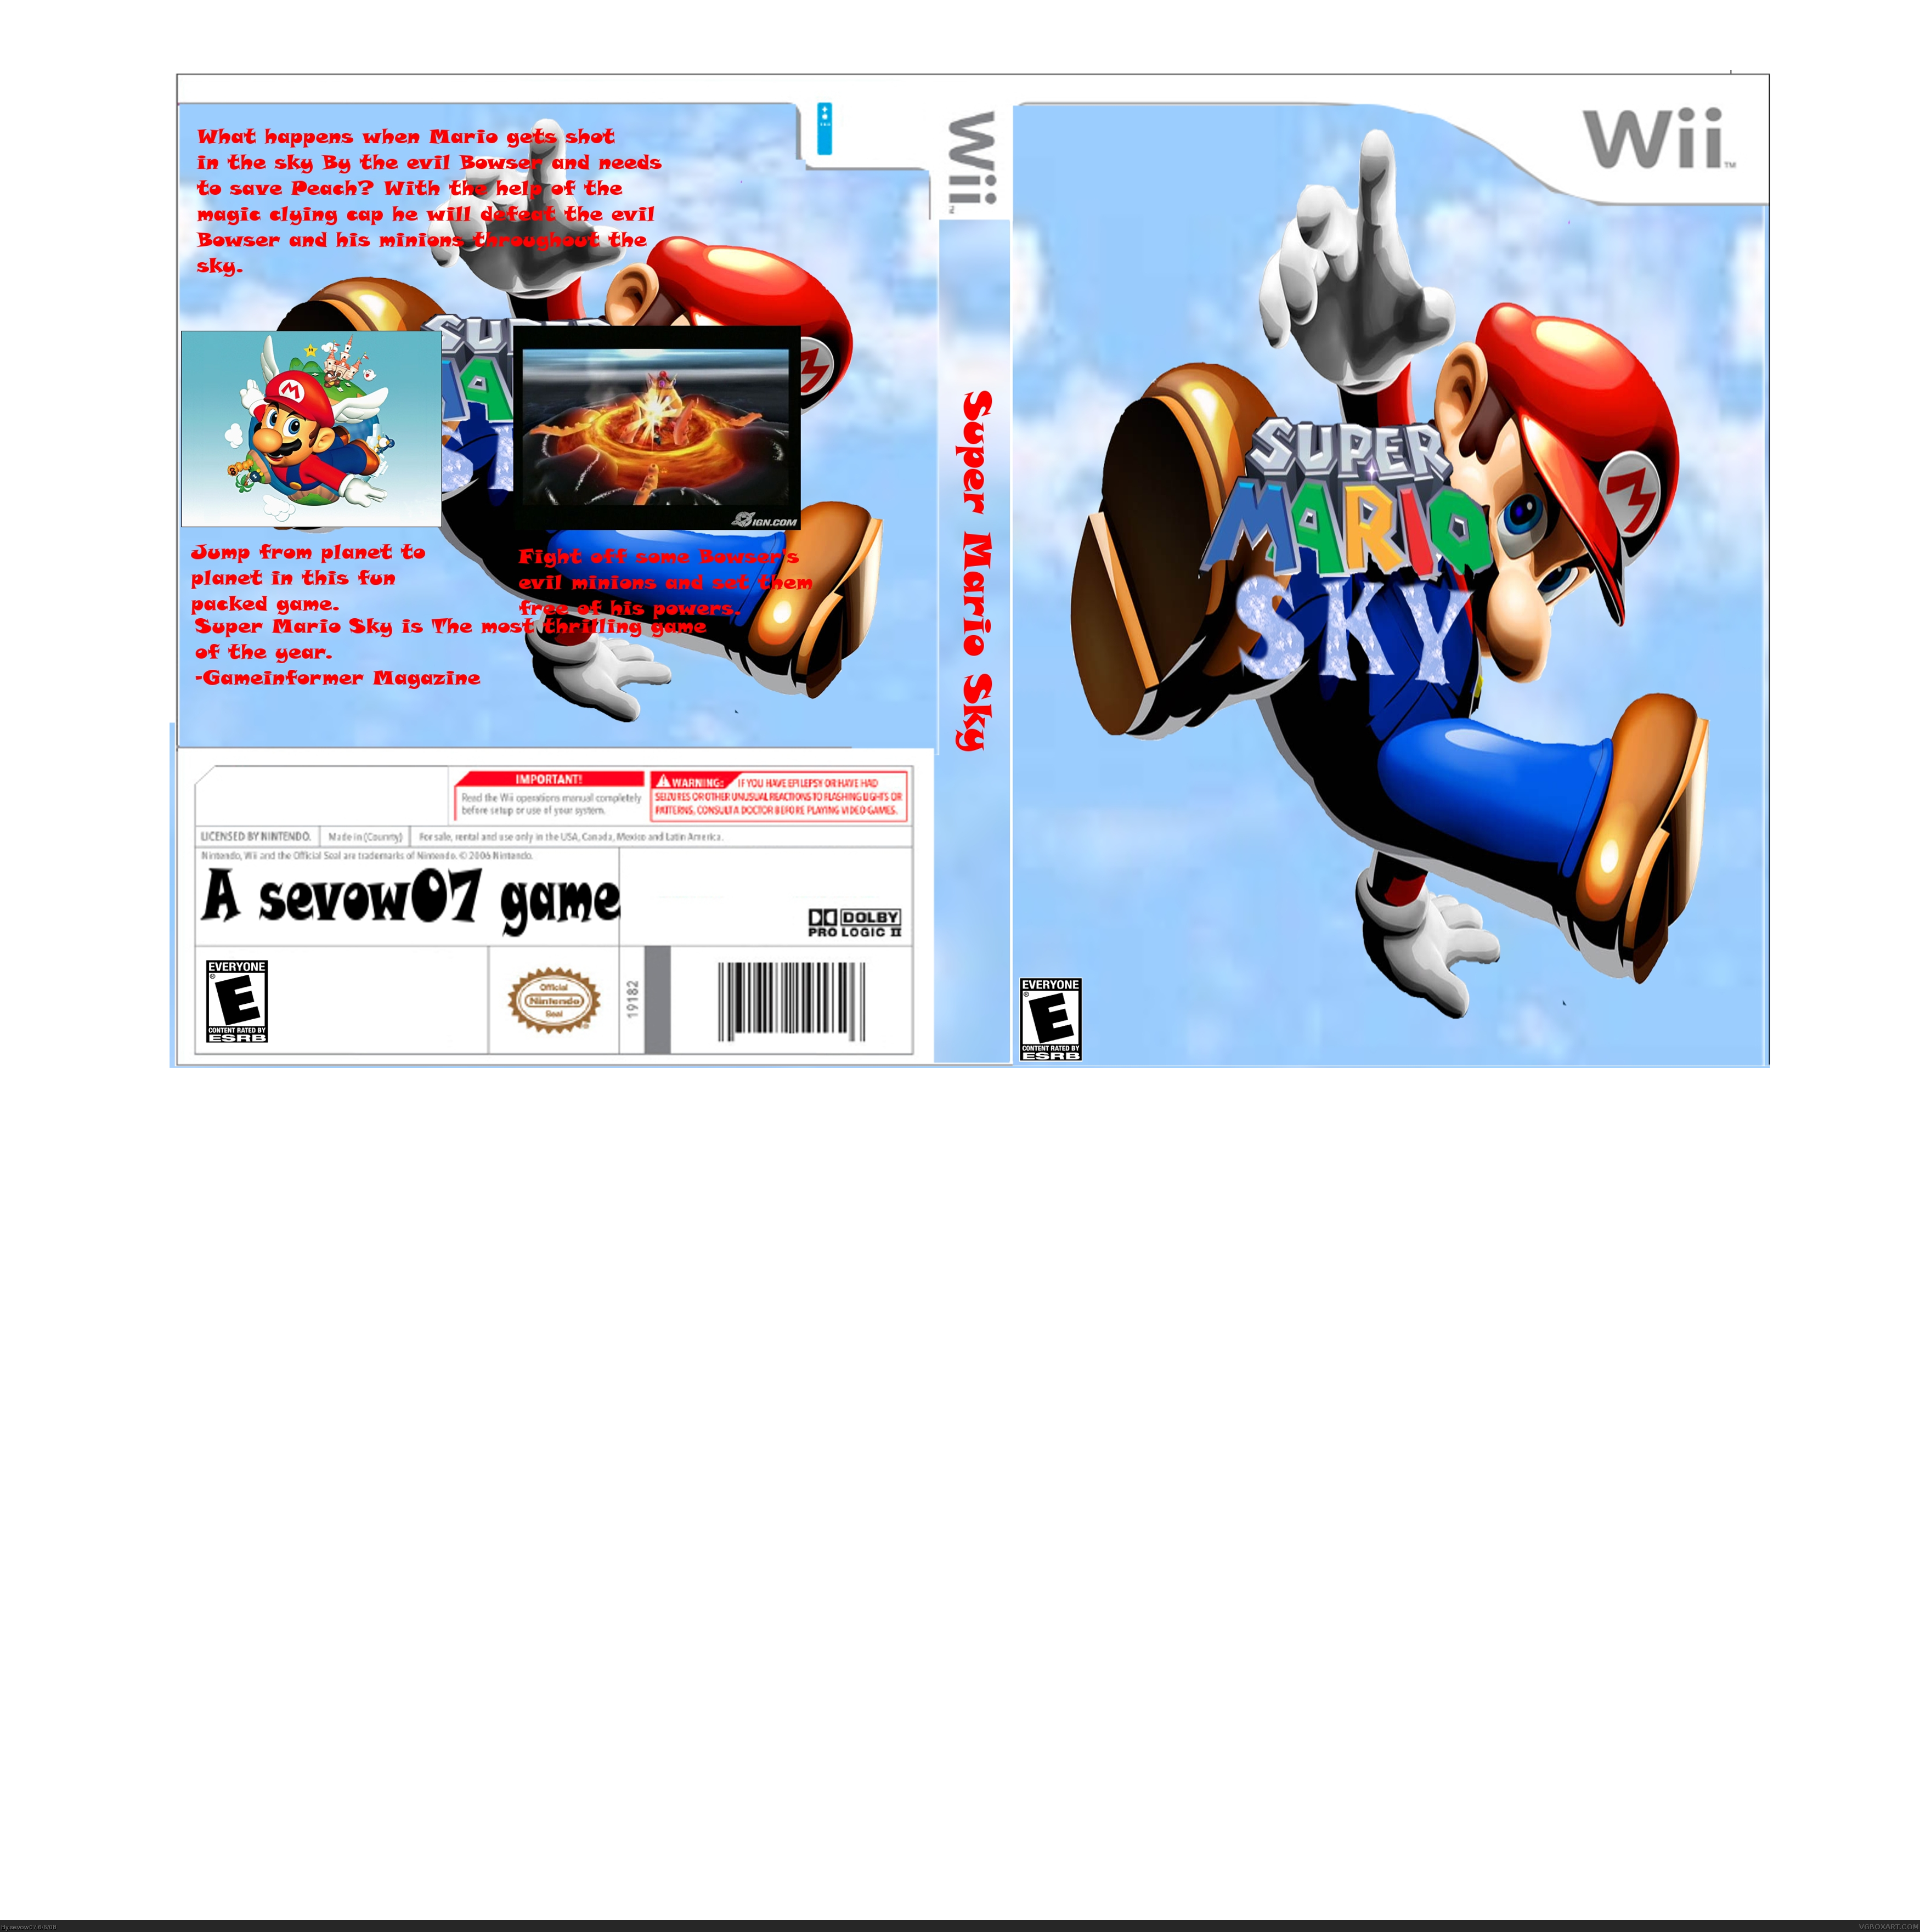 Super Mario Sky box cover